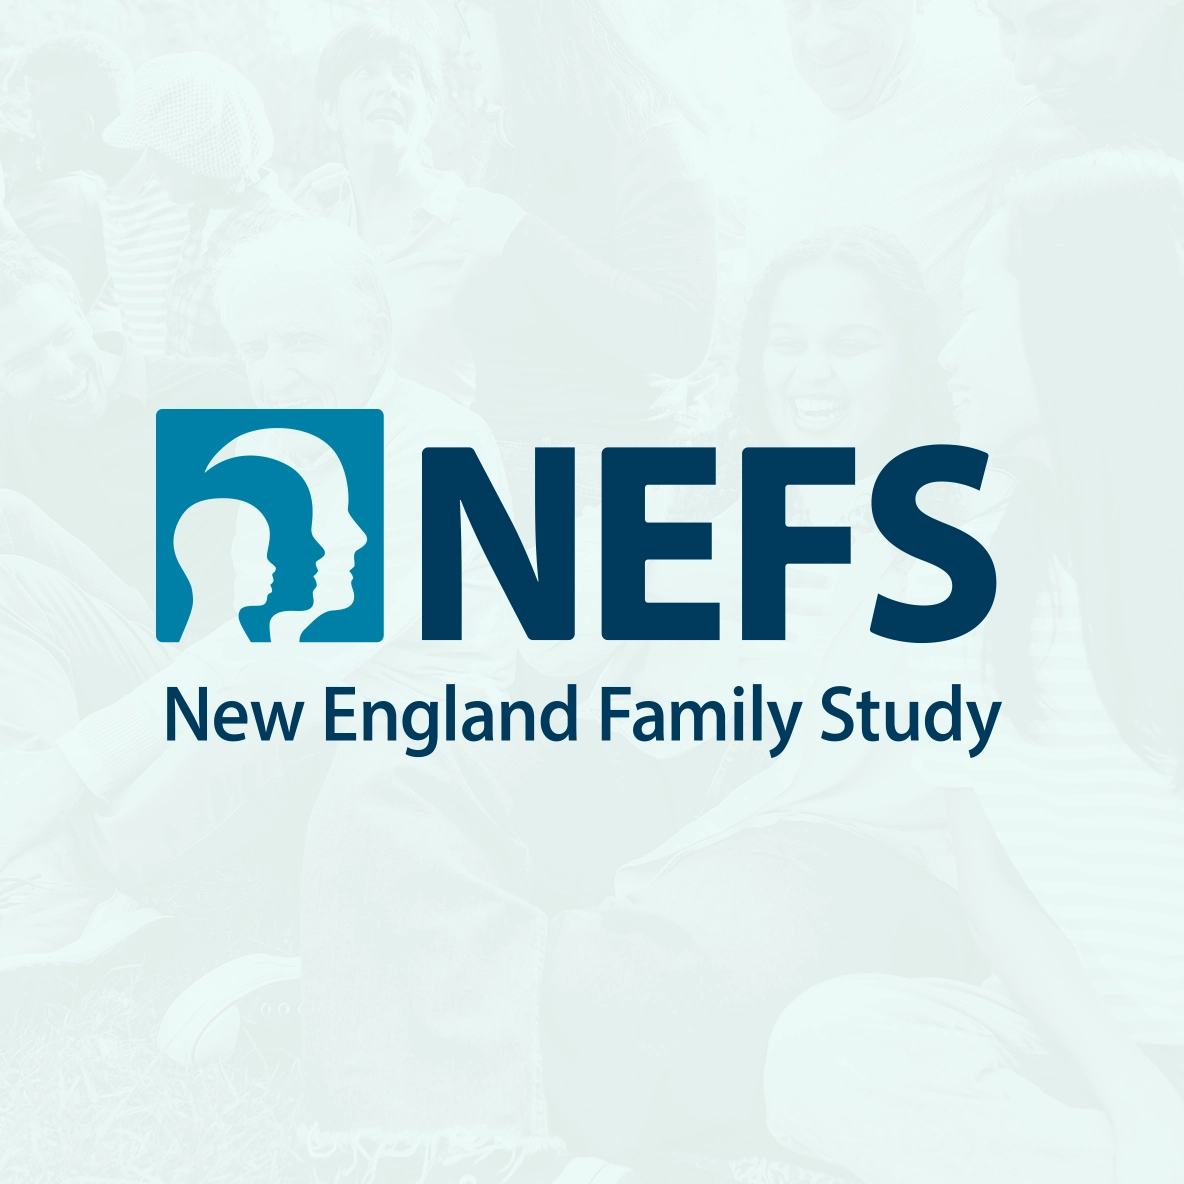 New England Family Study